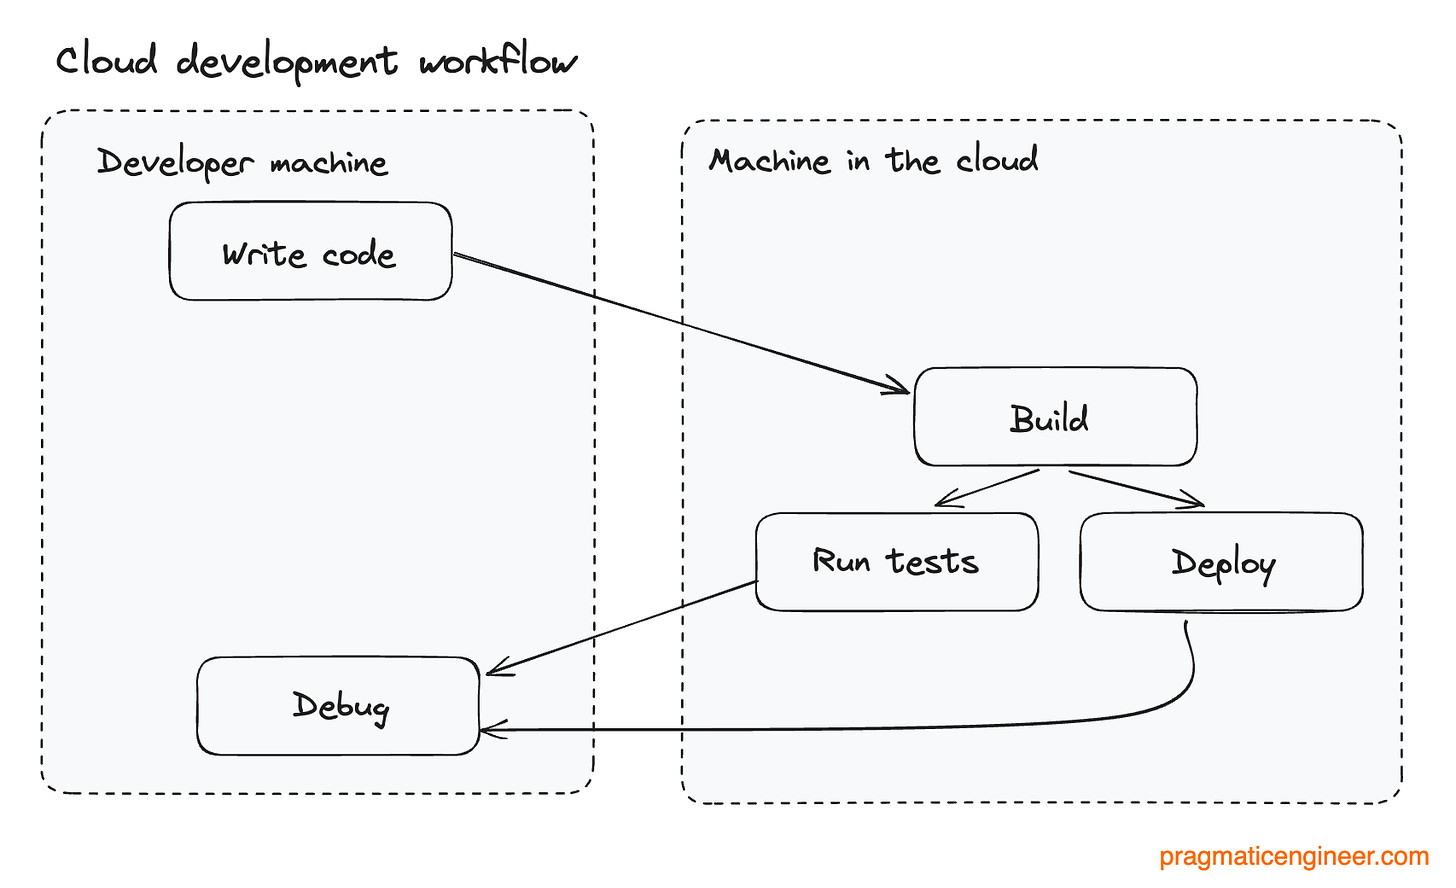 The cloud development workflow